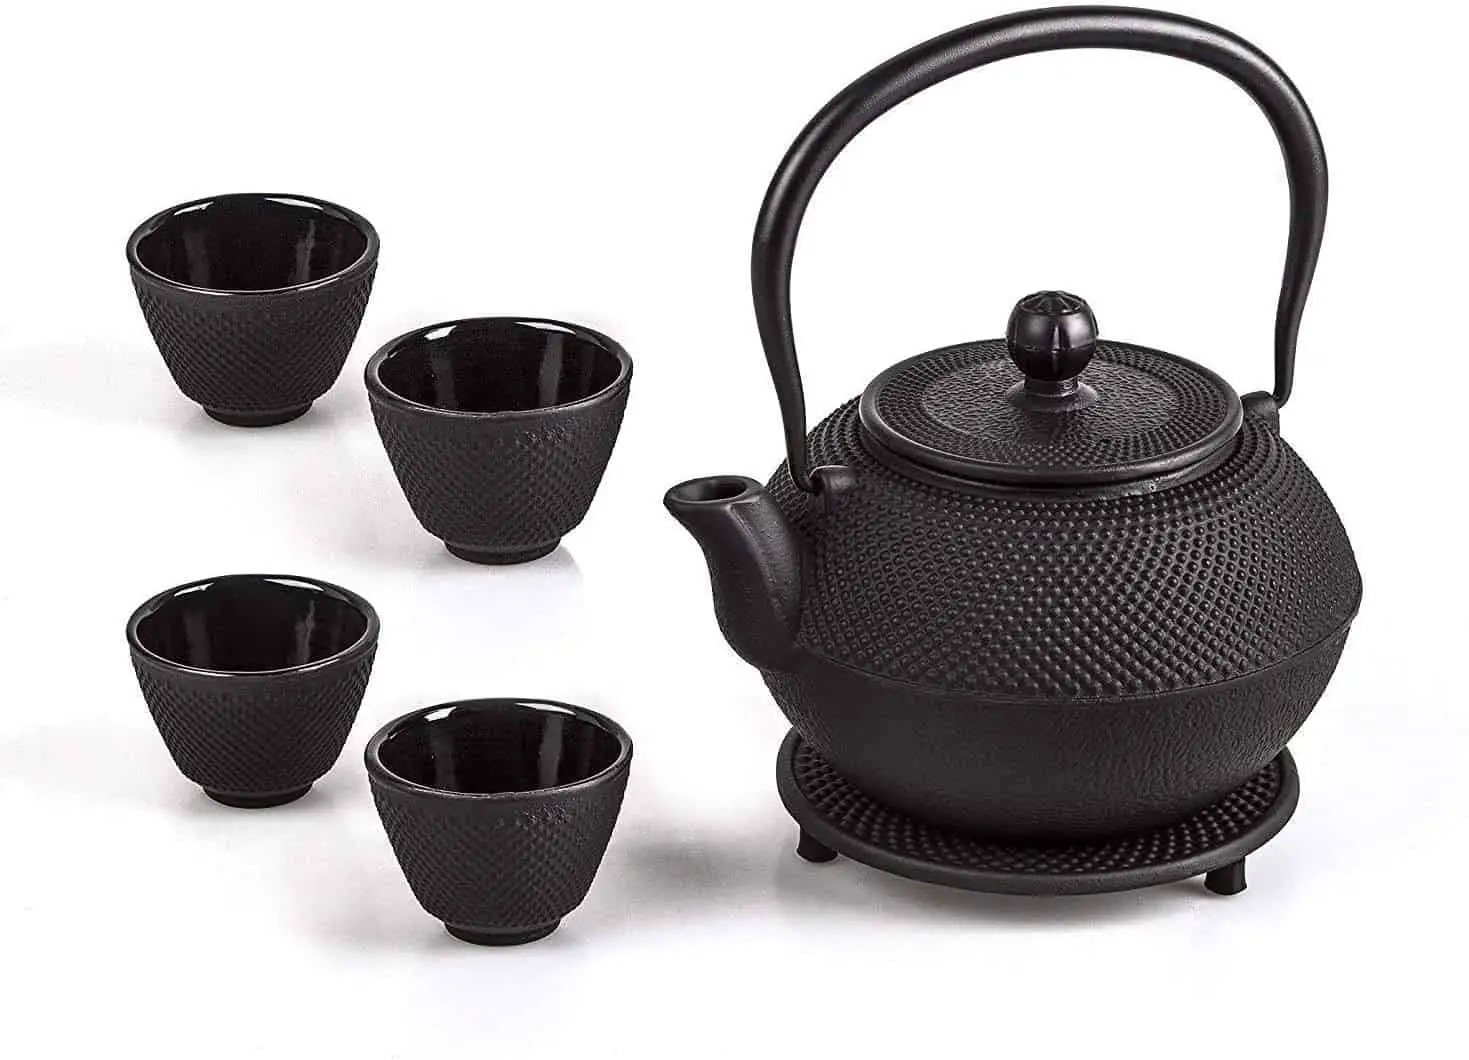 best tea sets